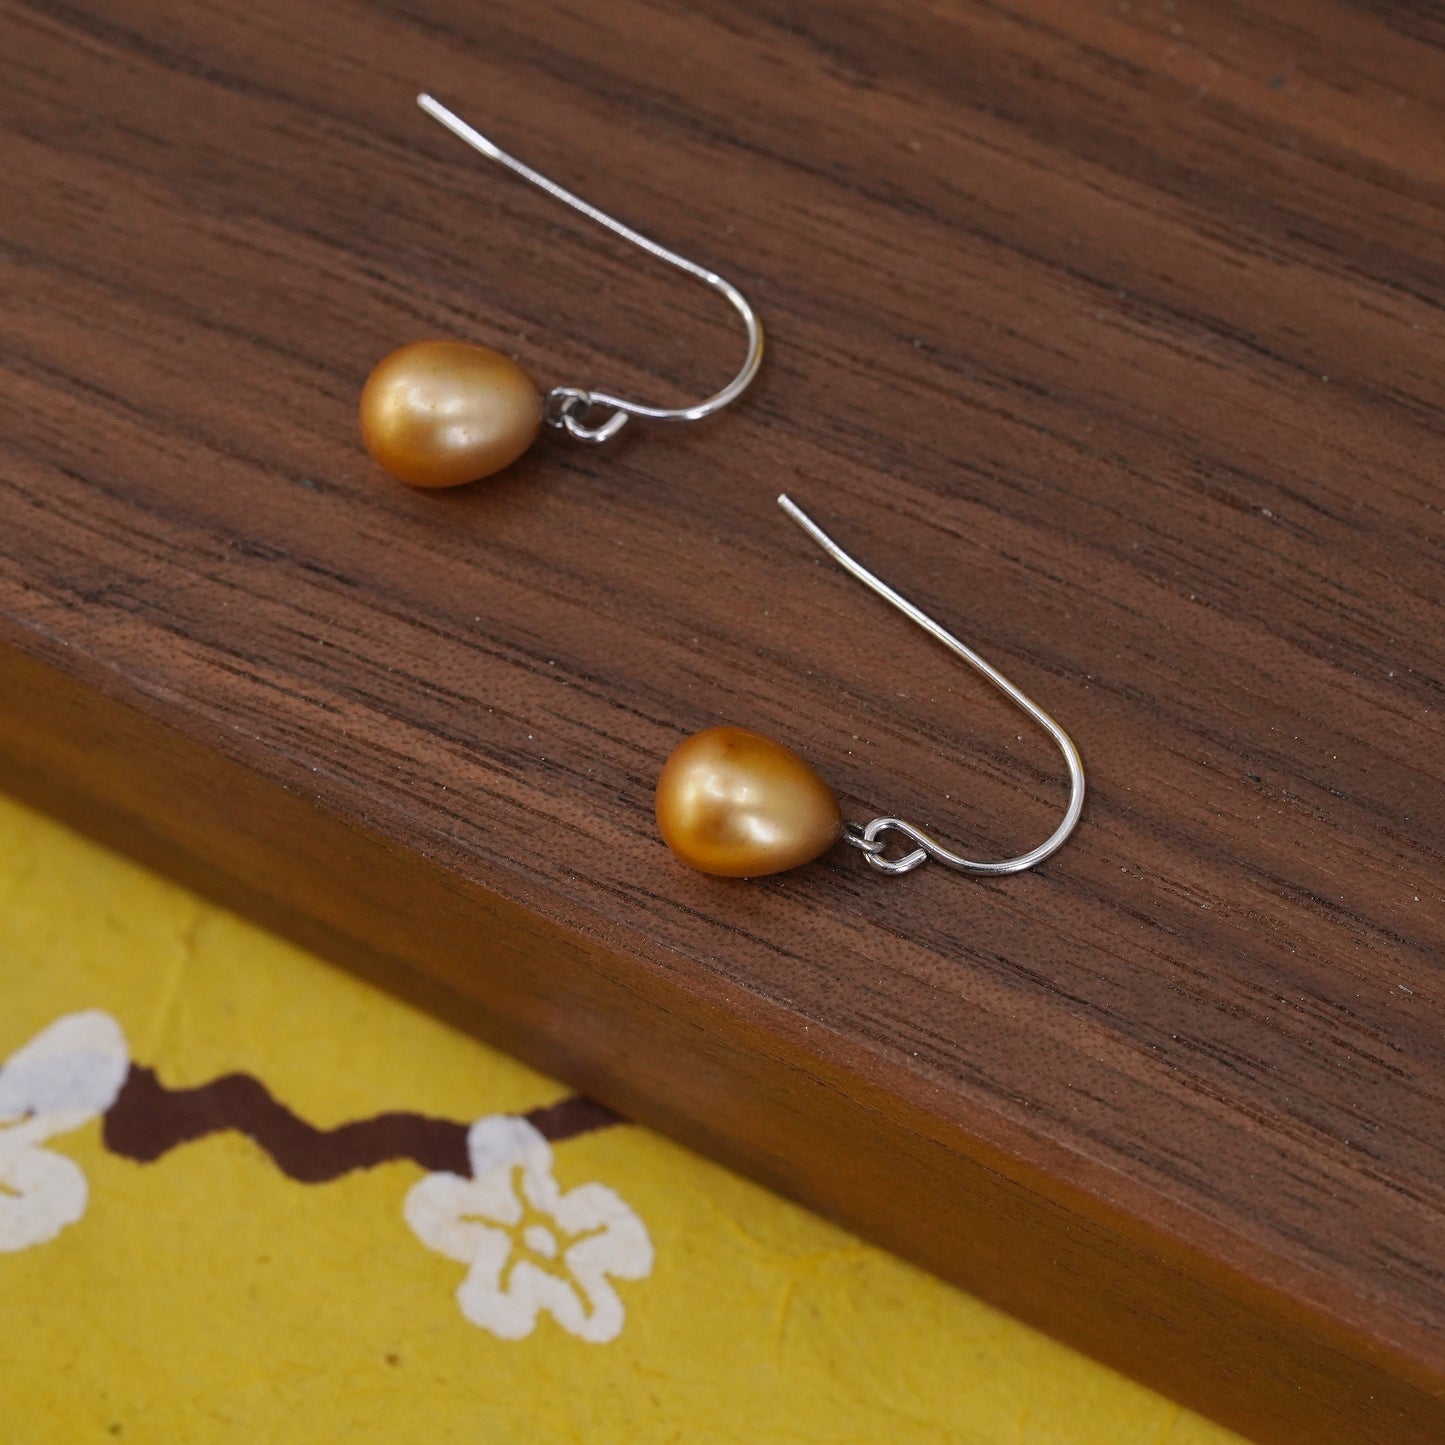 Vintage Sterling silver handmade earrings, 925 hooks with golden pearl drops